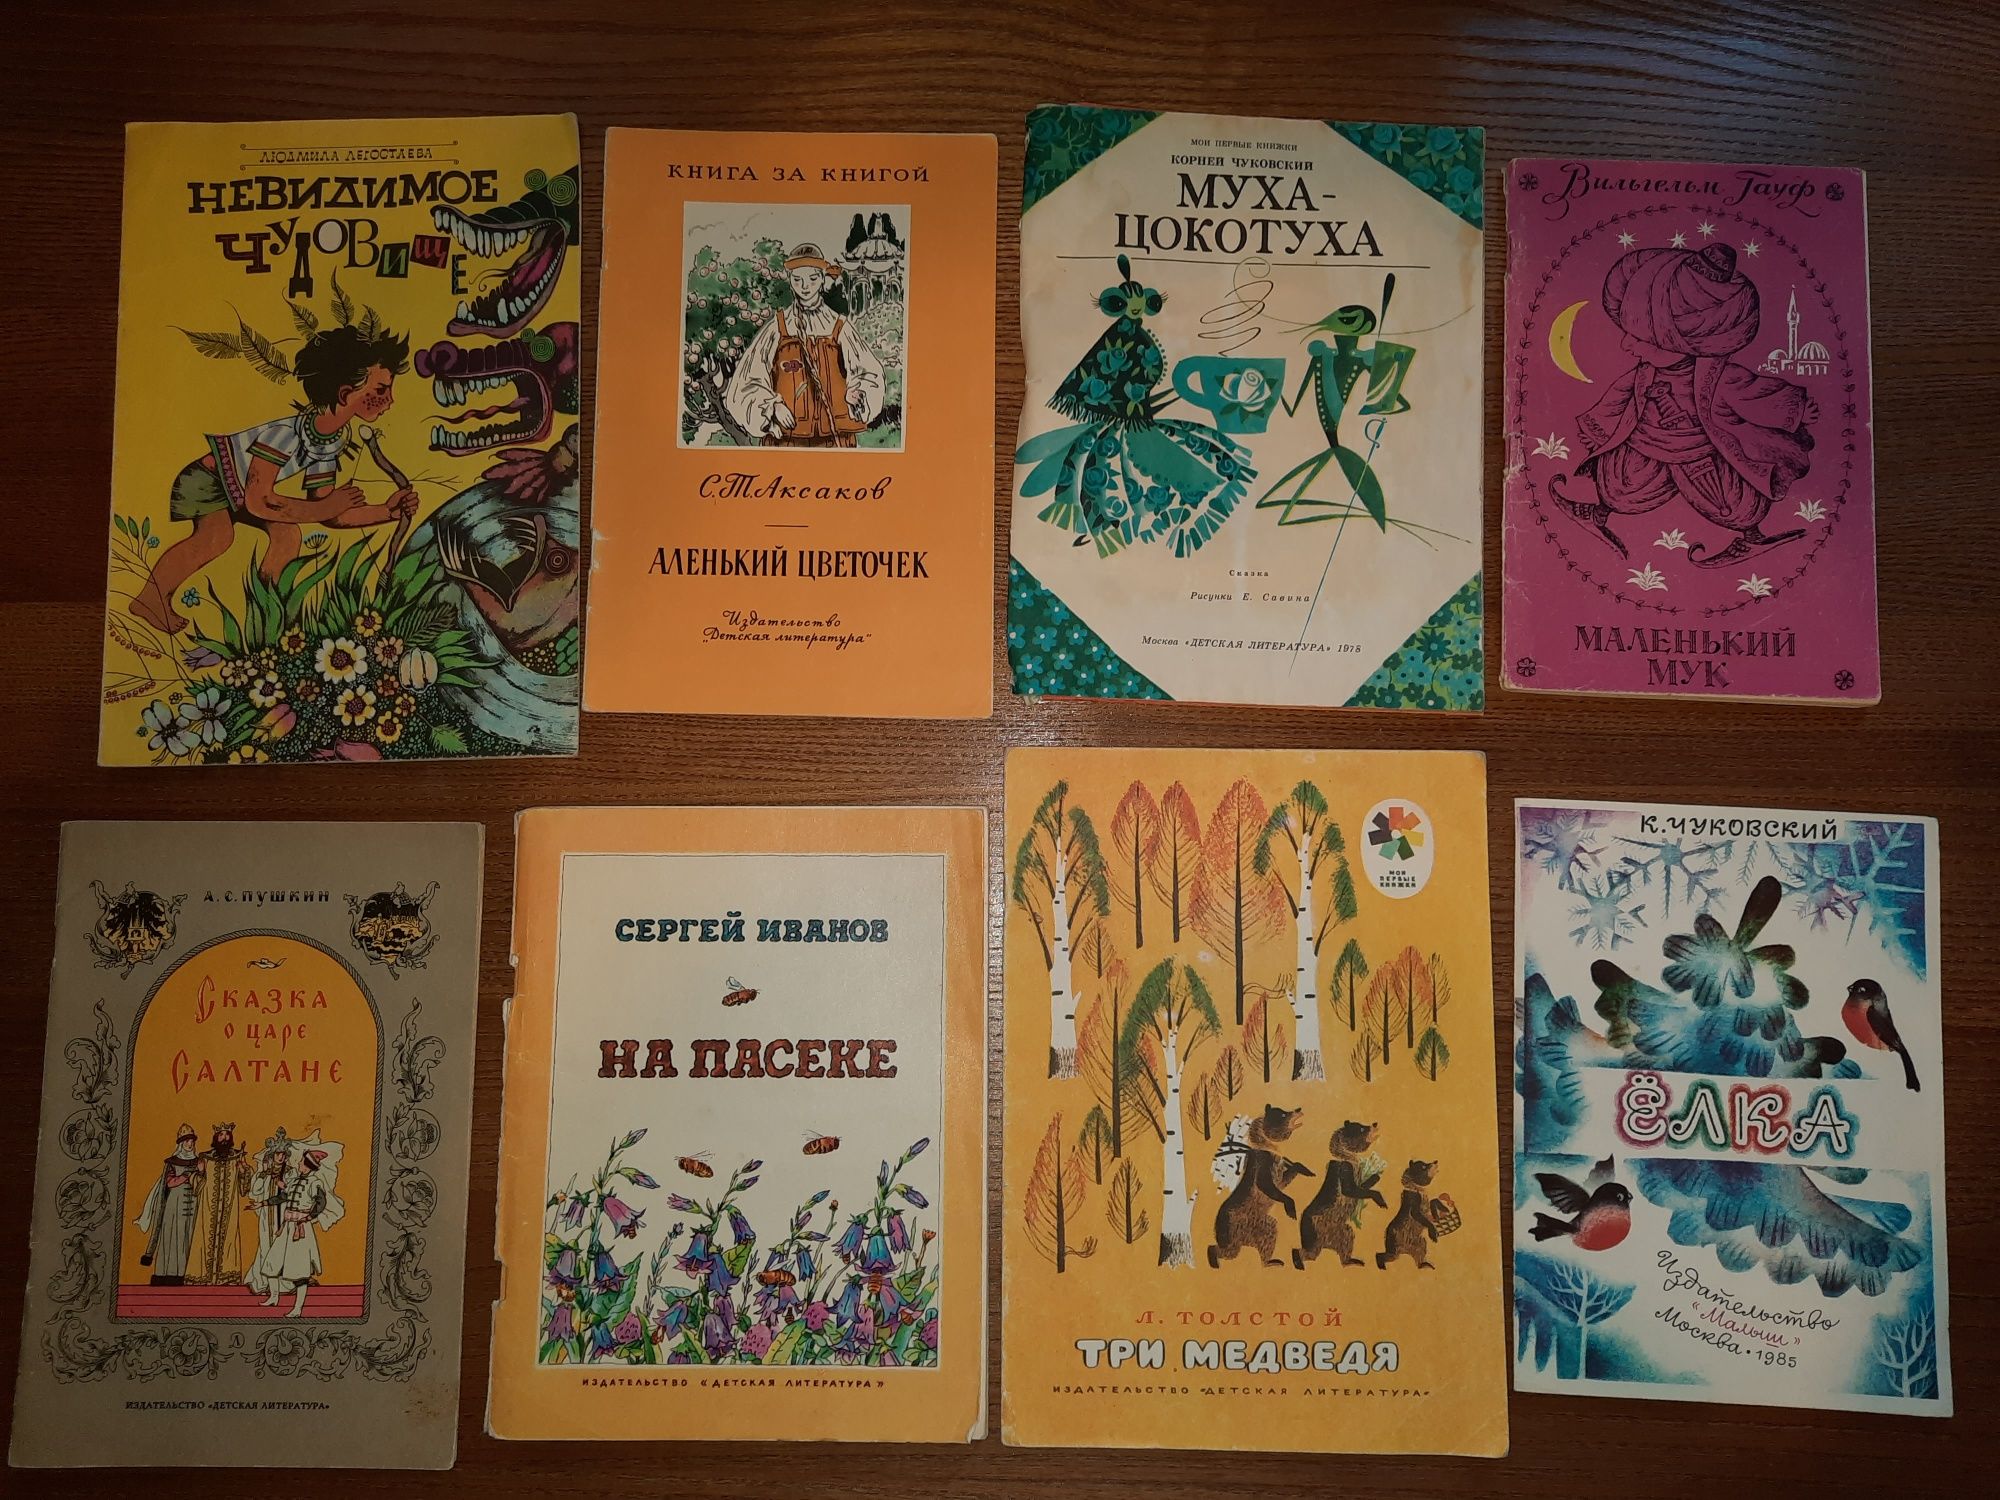 Детские книги сказки СССР Советские винтаж ретро